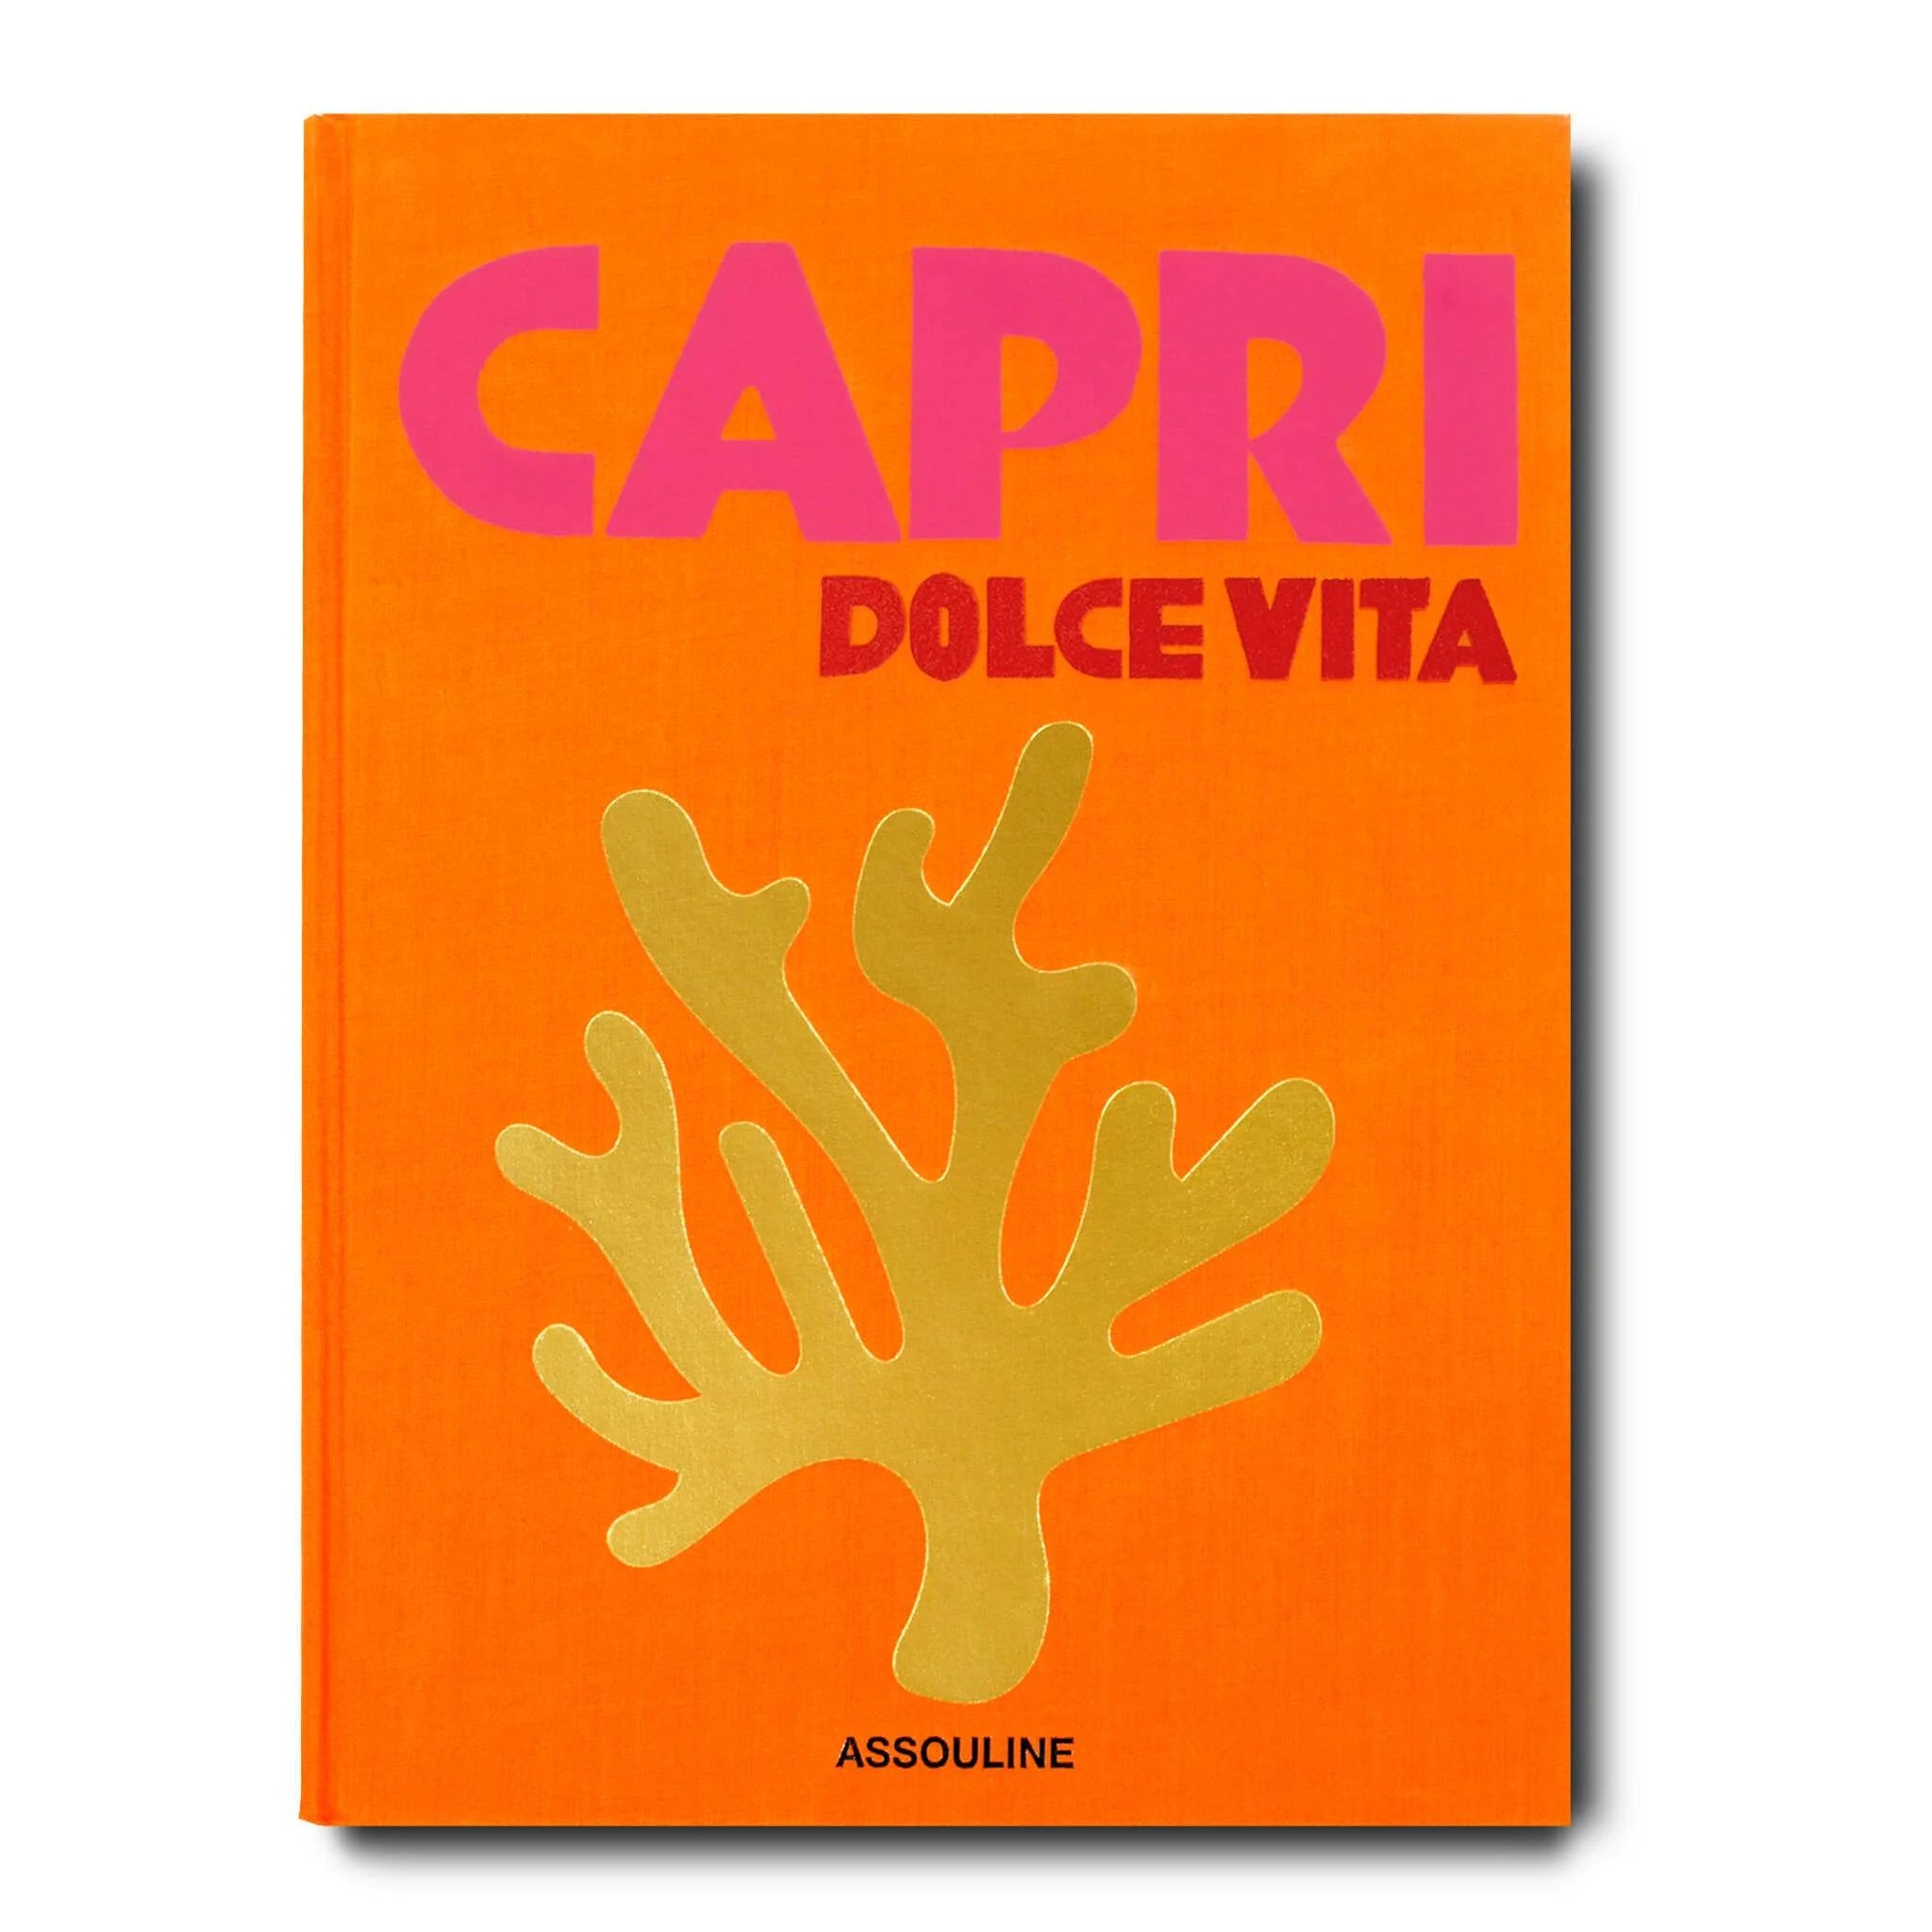 CAPRI DOLCE VITA, libro grande decorativo sobre viajes de la marca Assouline